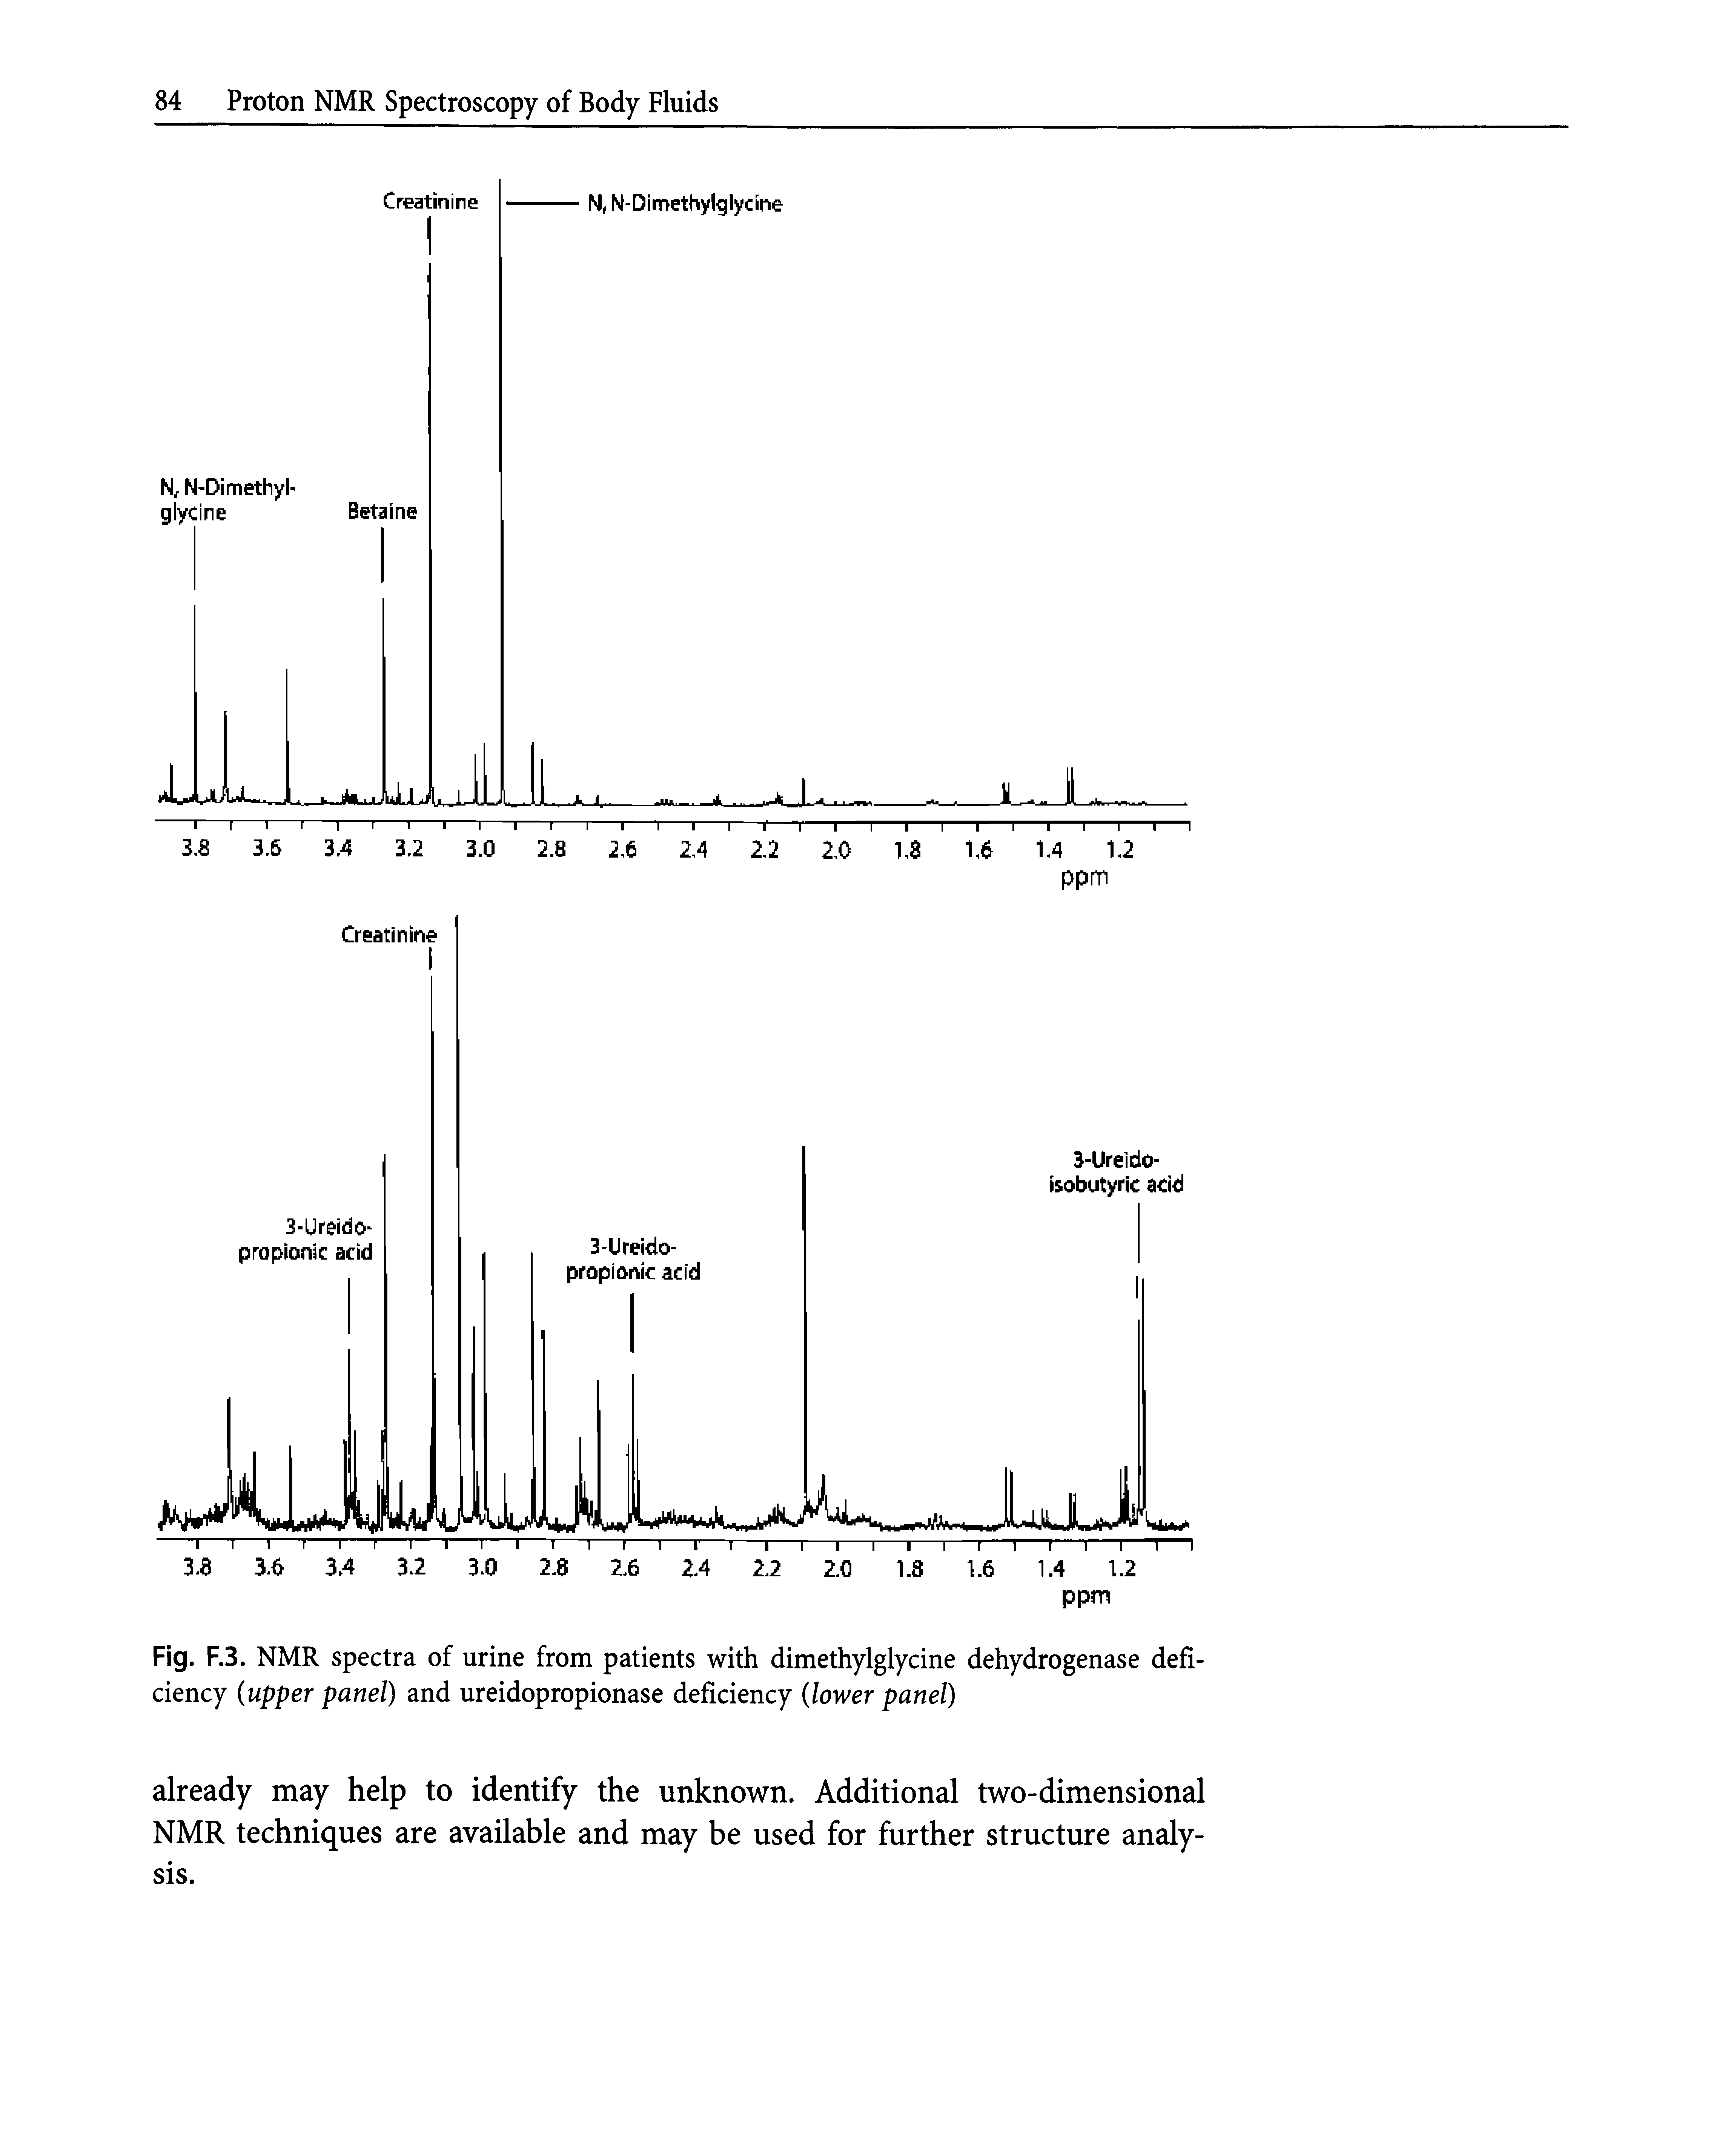 Fig. F.3. NMR spectra of urine from patients with dimethylglycine dehydrogenase deficiency (upper panel) and ureidopropionase deficiency (lower panel)...